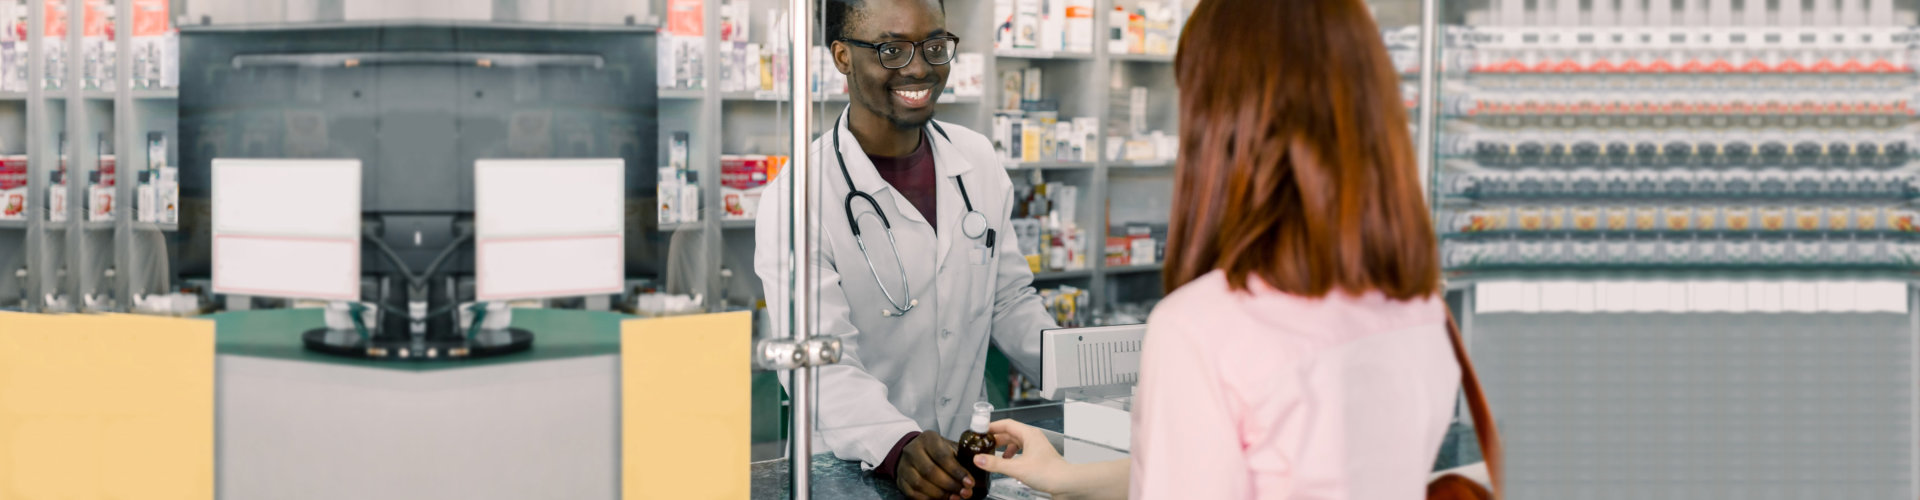 Smiling male pharmacist giving medicine